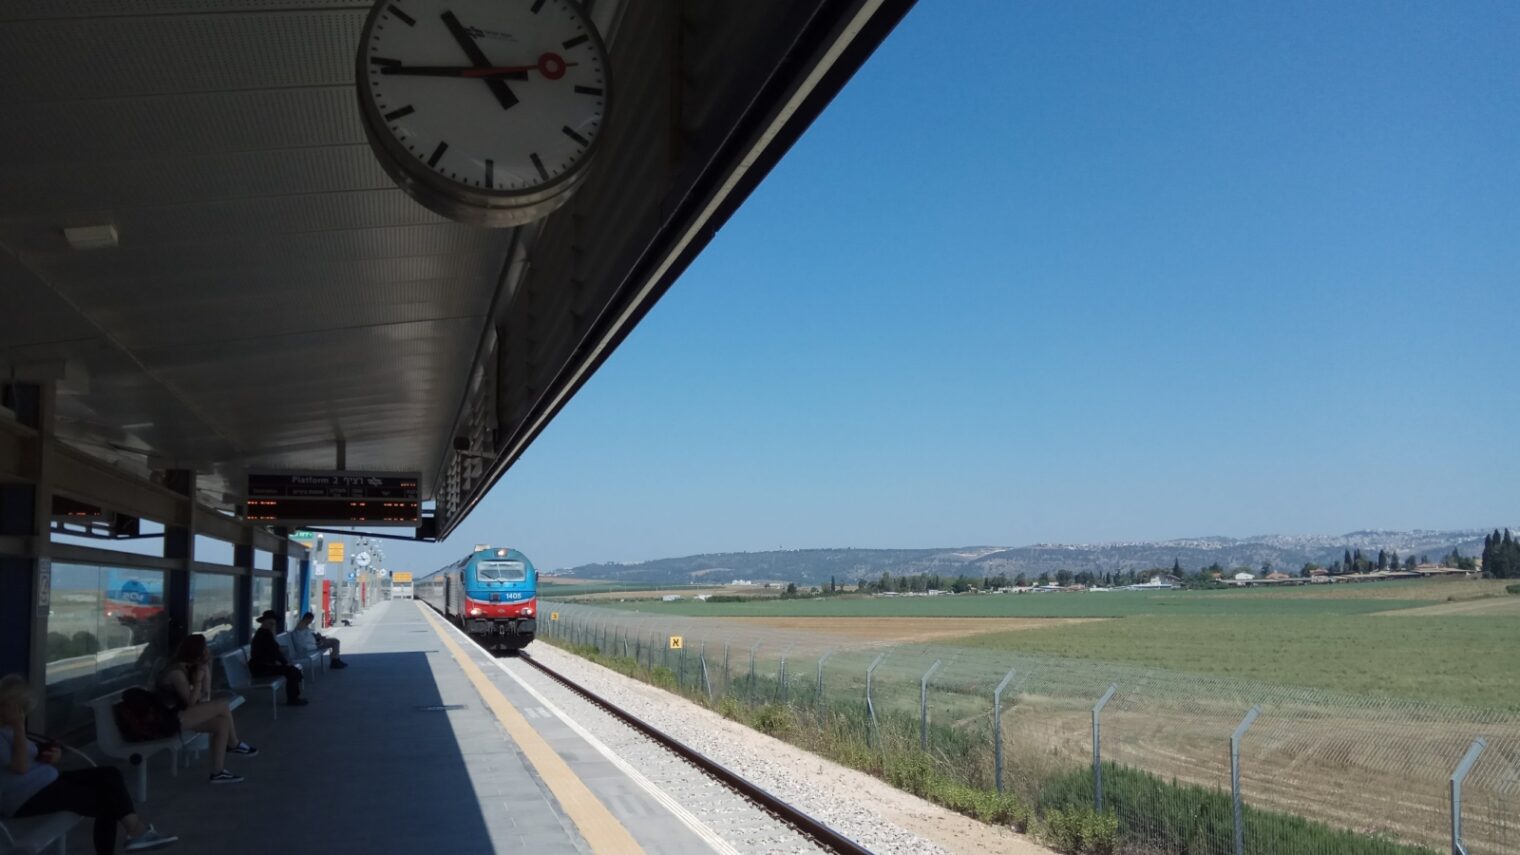 Israel Railways photo by Eli Halfin